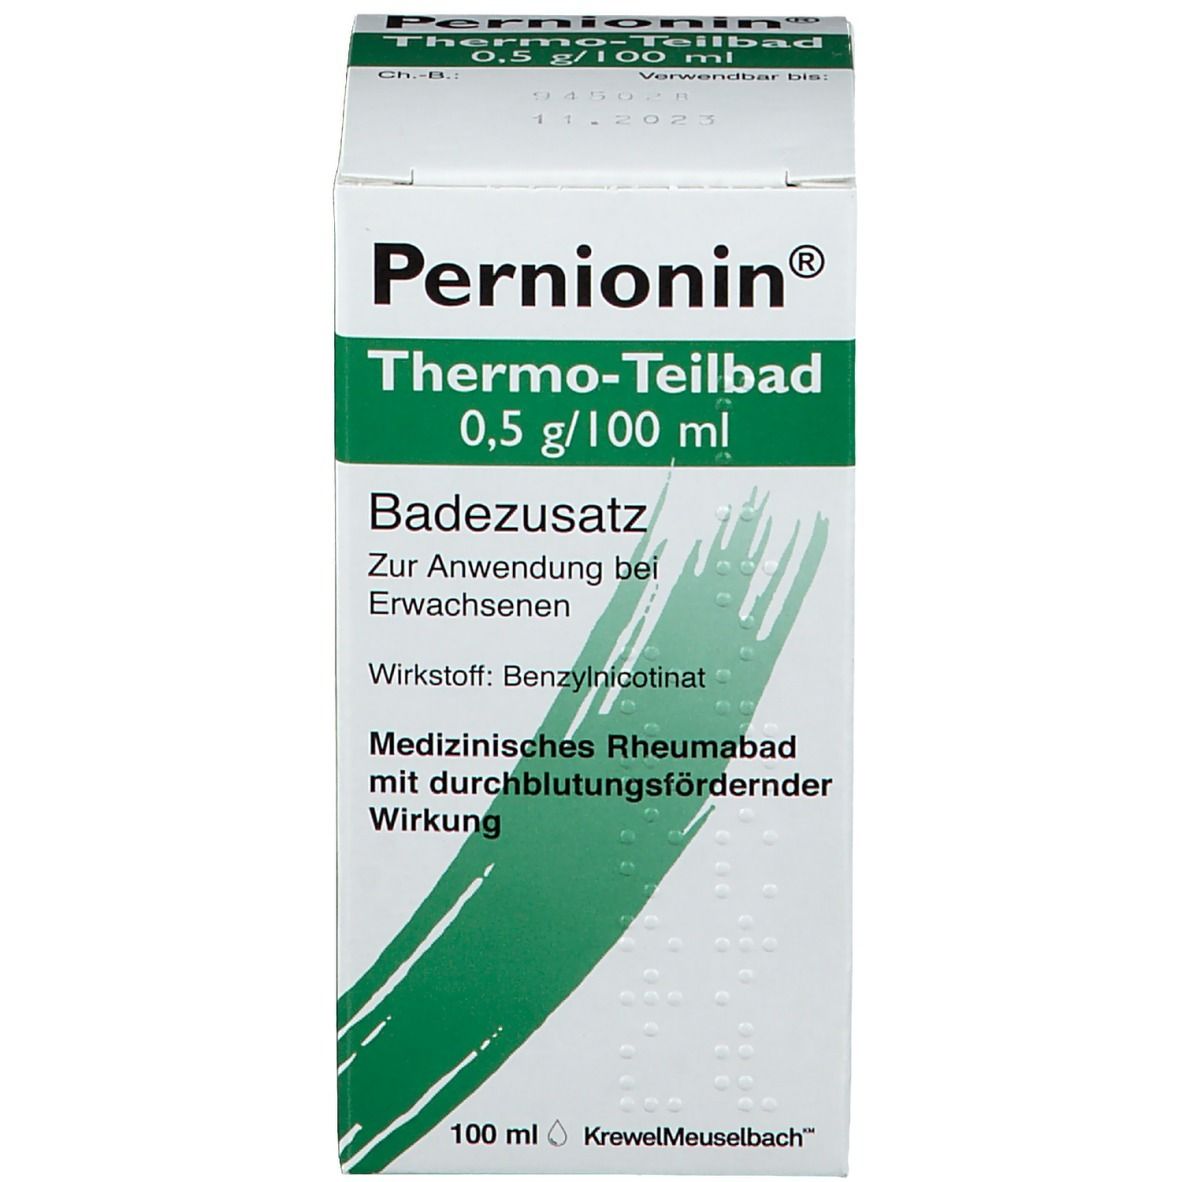 Pernionin® Thermo Teilbad